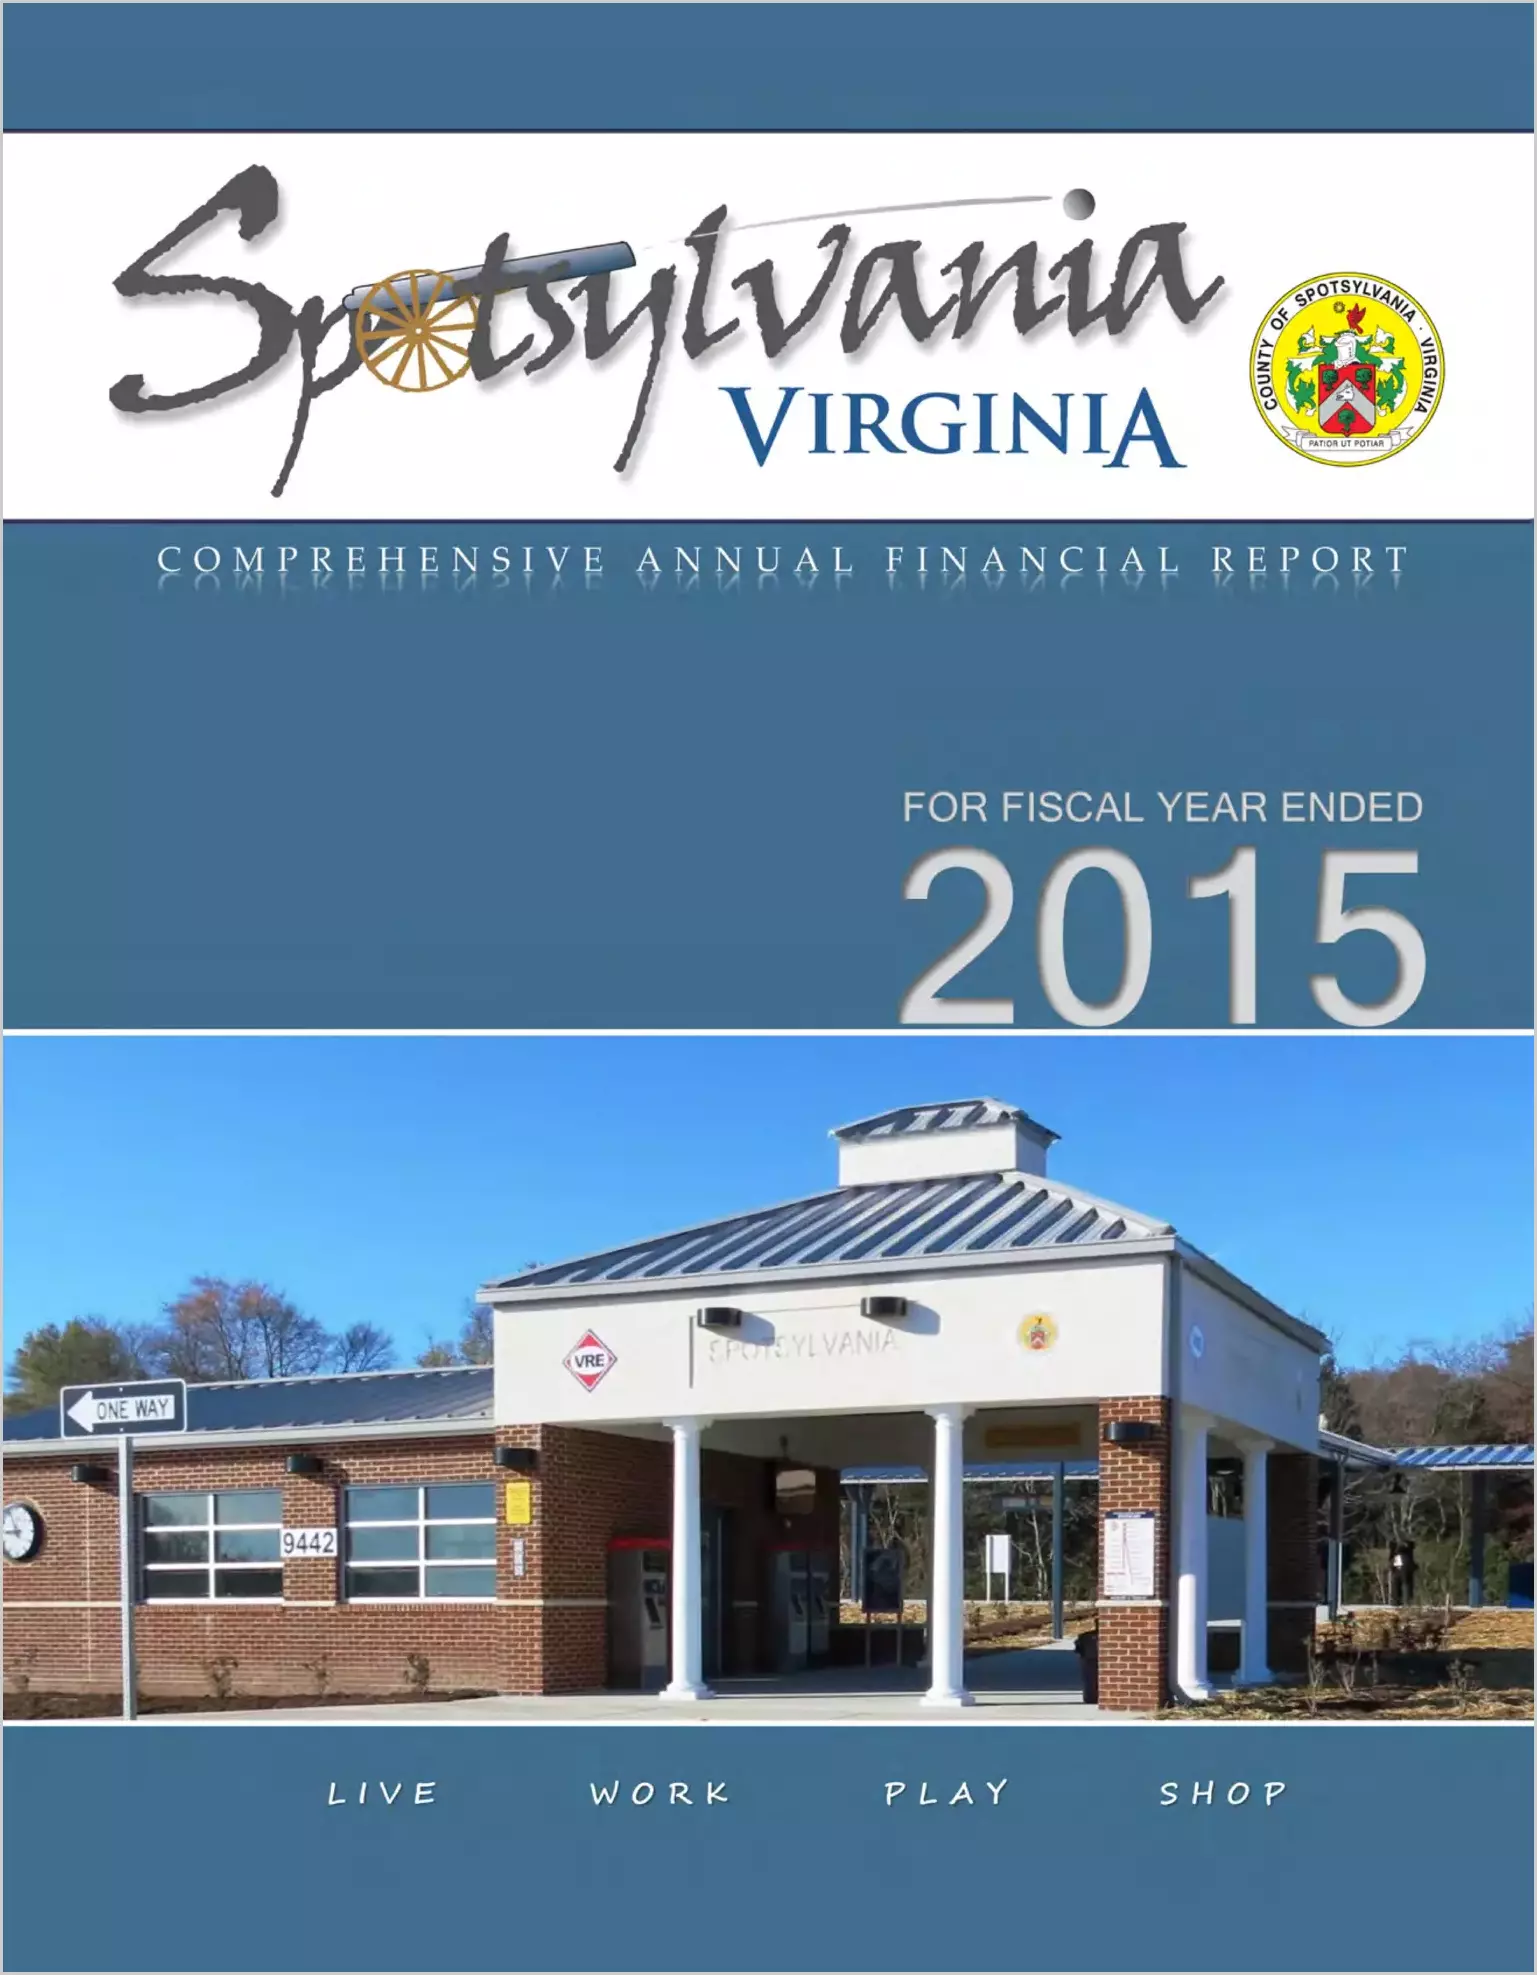 2015 Annual Financial Report for County of Spotsylvania